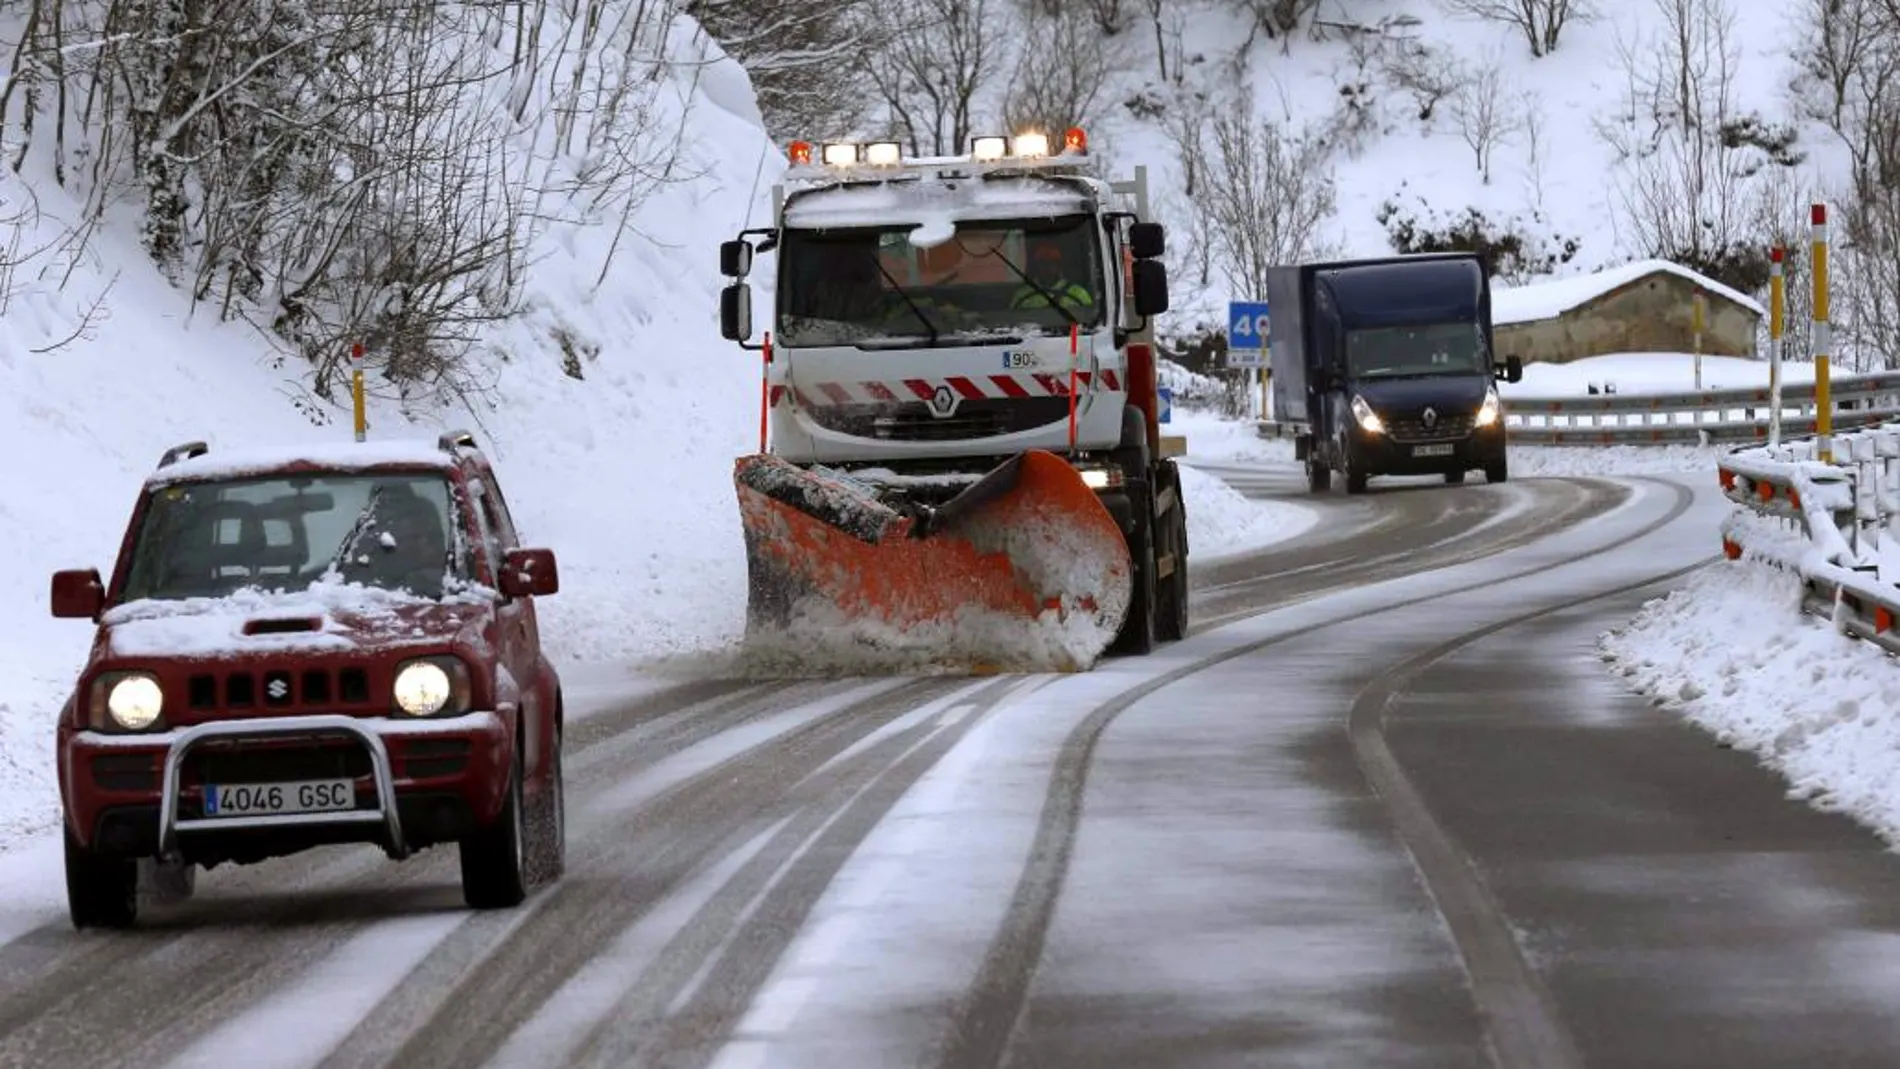 Una máquina quitanieves limpia la carretera de Pajares que se encuentra cubierta de nieve